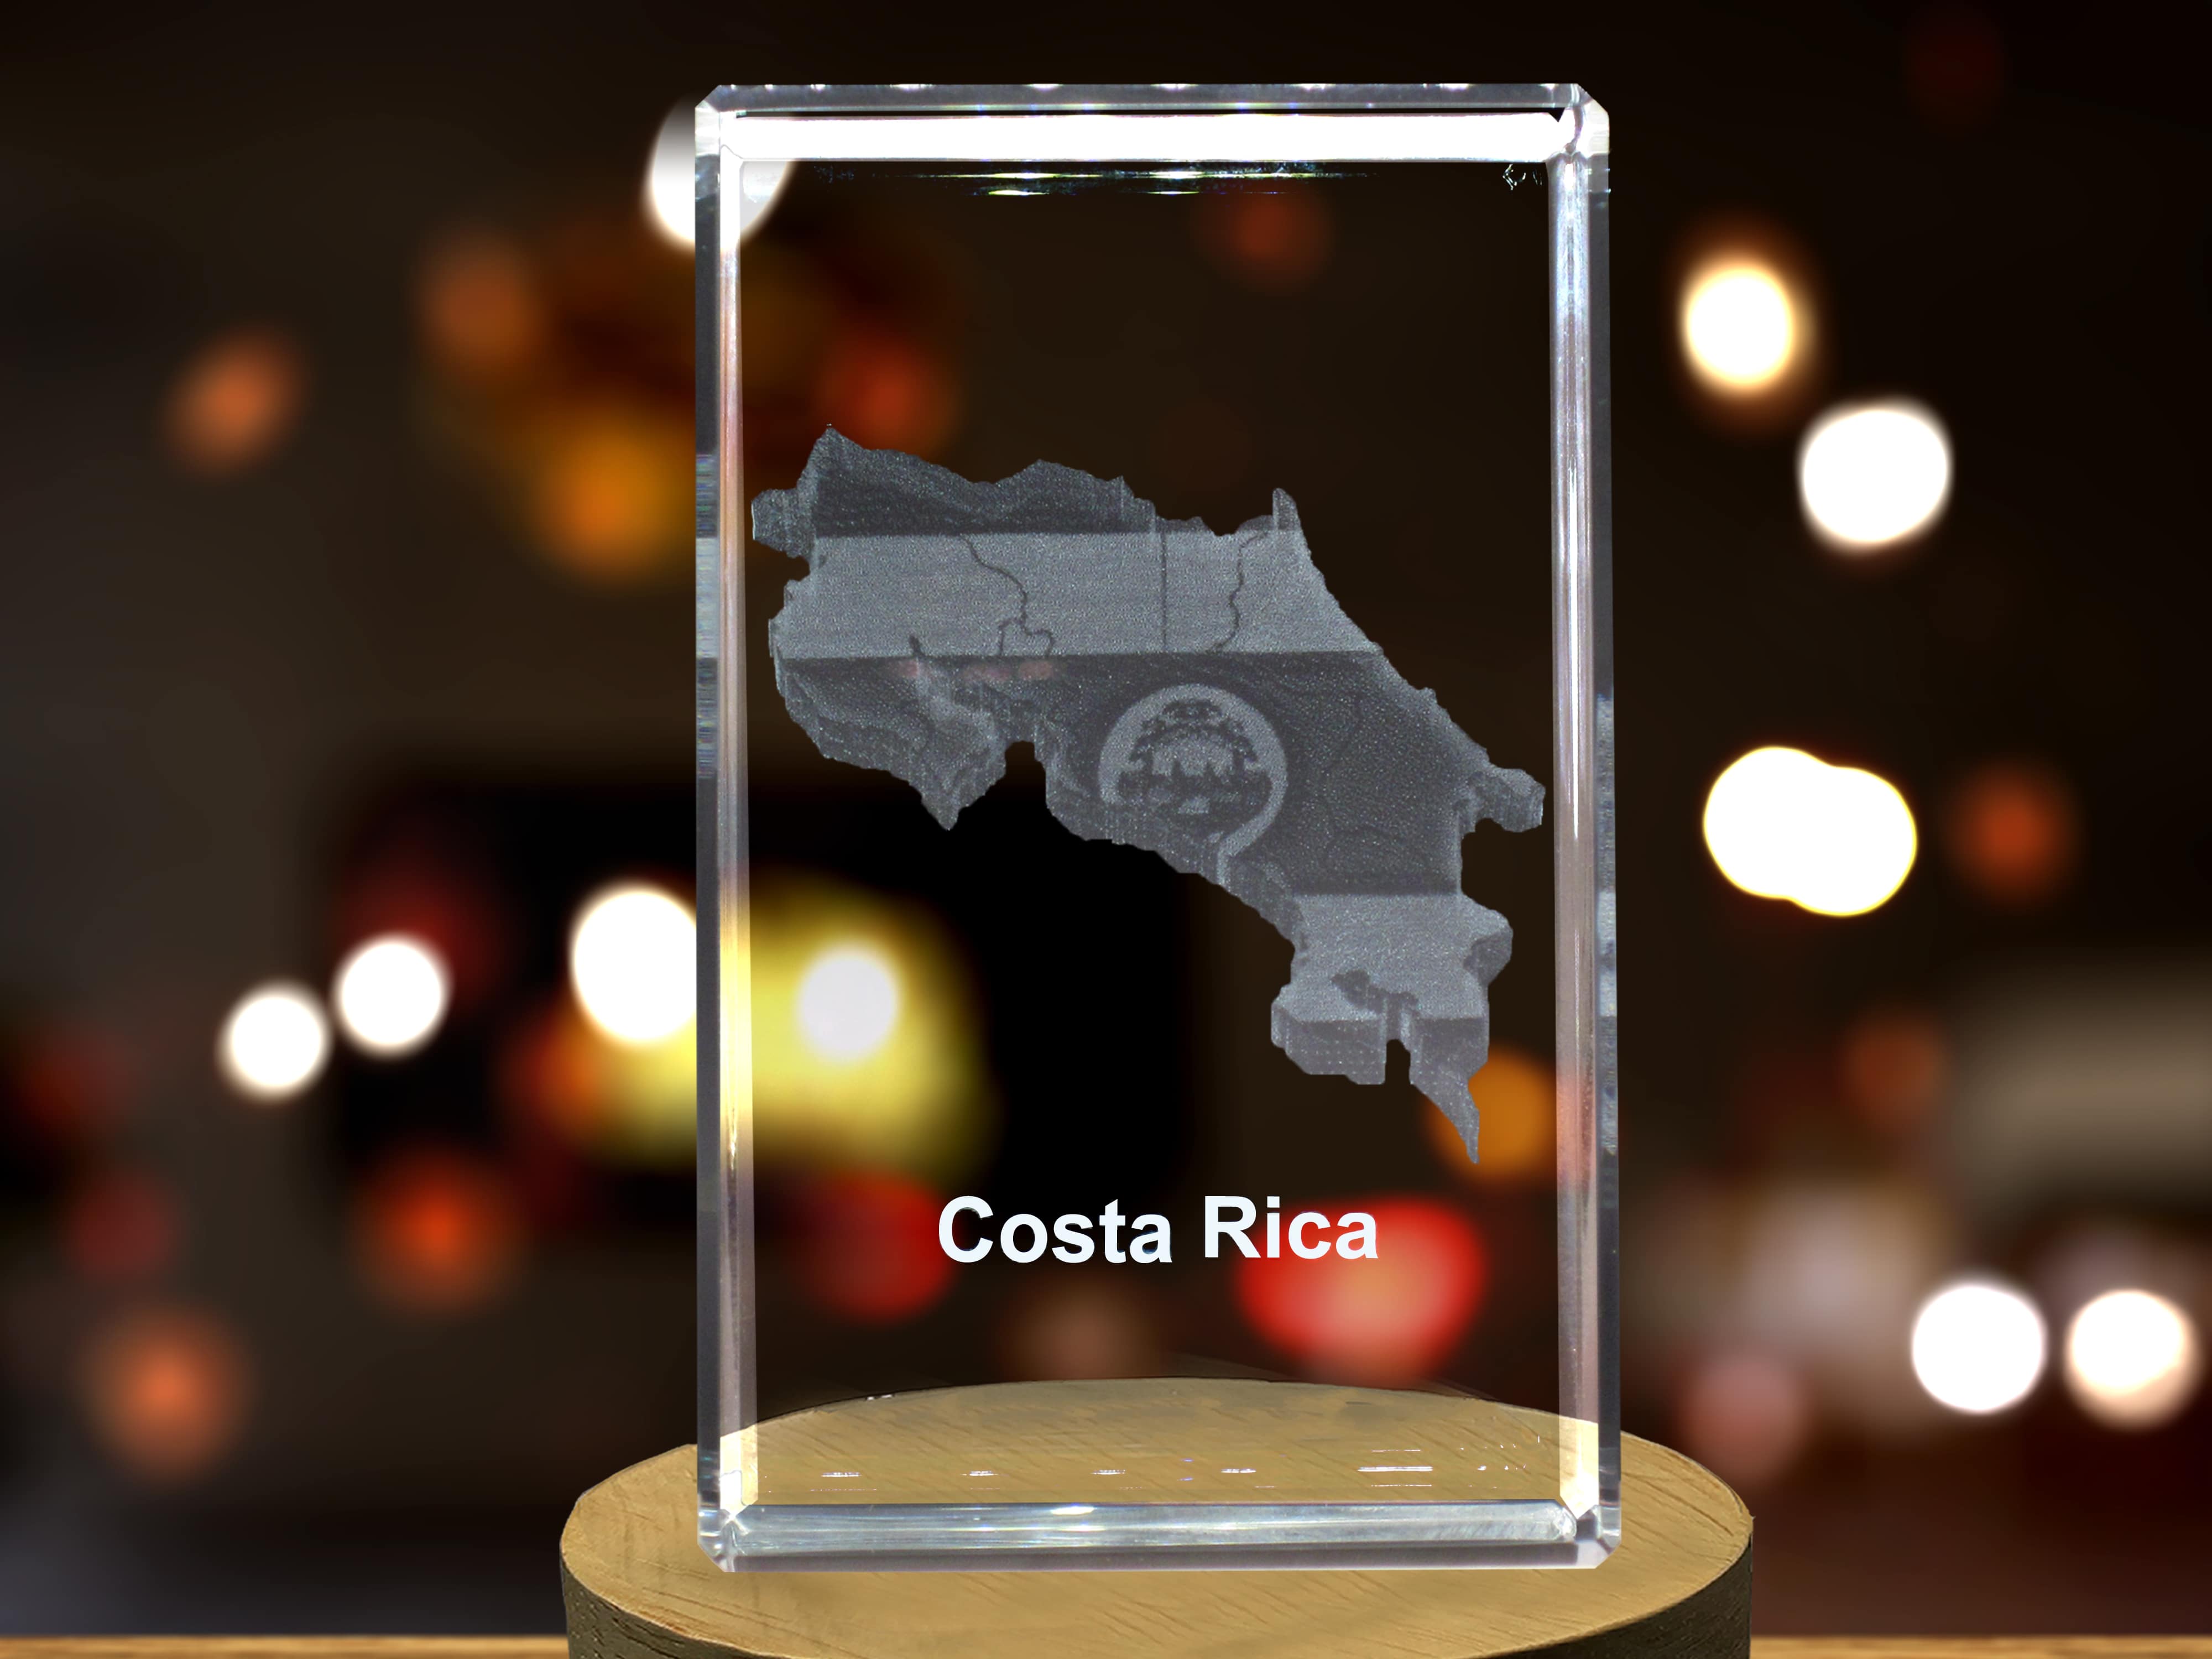 Costa Rica 3D Engraved Crystal 3D Engraved Crystal Keepsake/Gift/Decor/Collectible/Souvenir A&B Crystal Collection